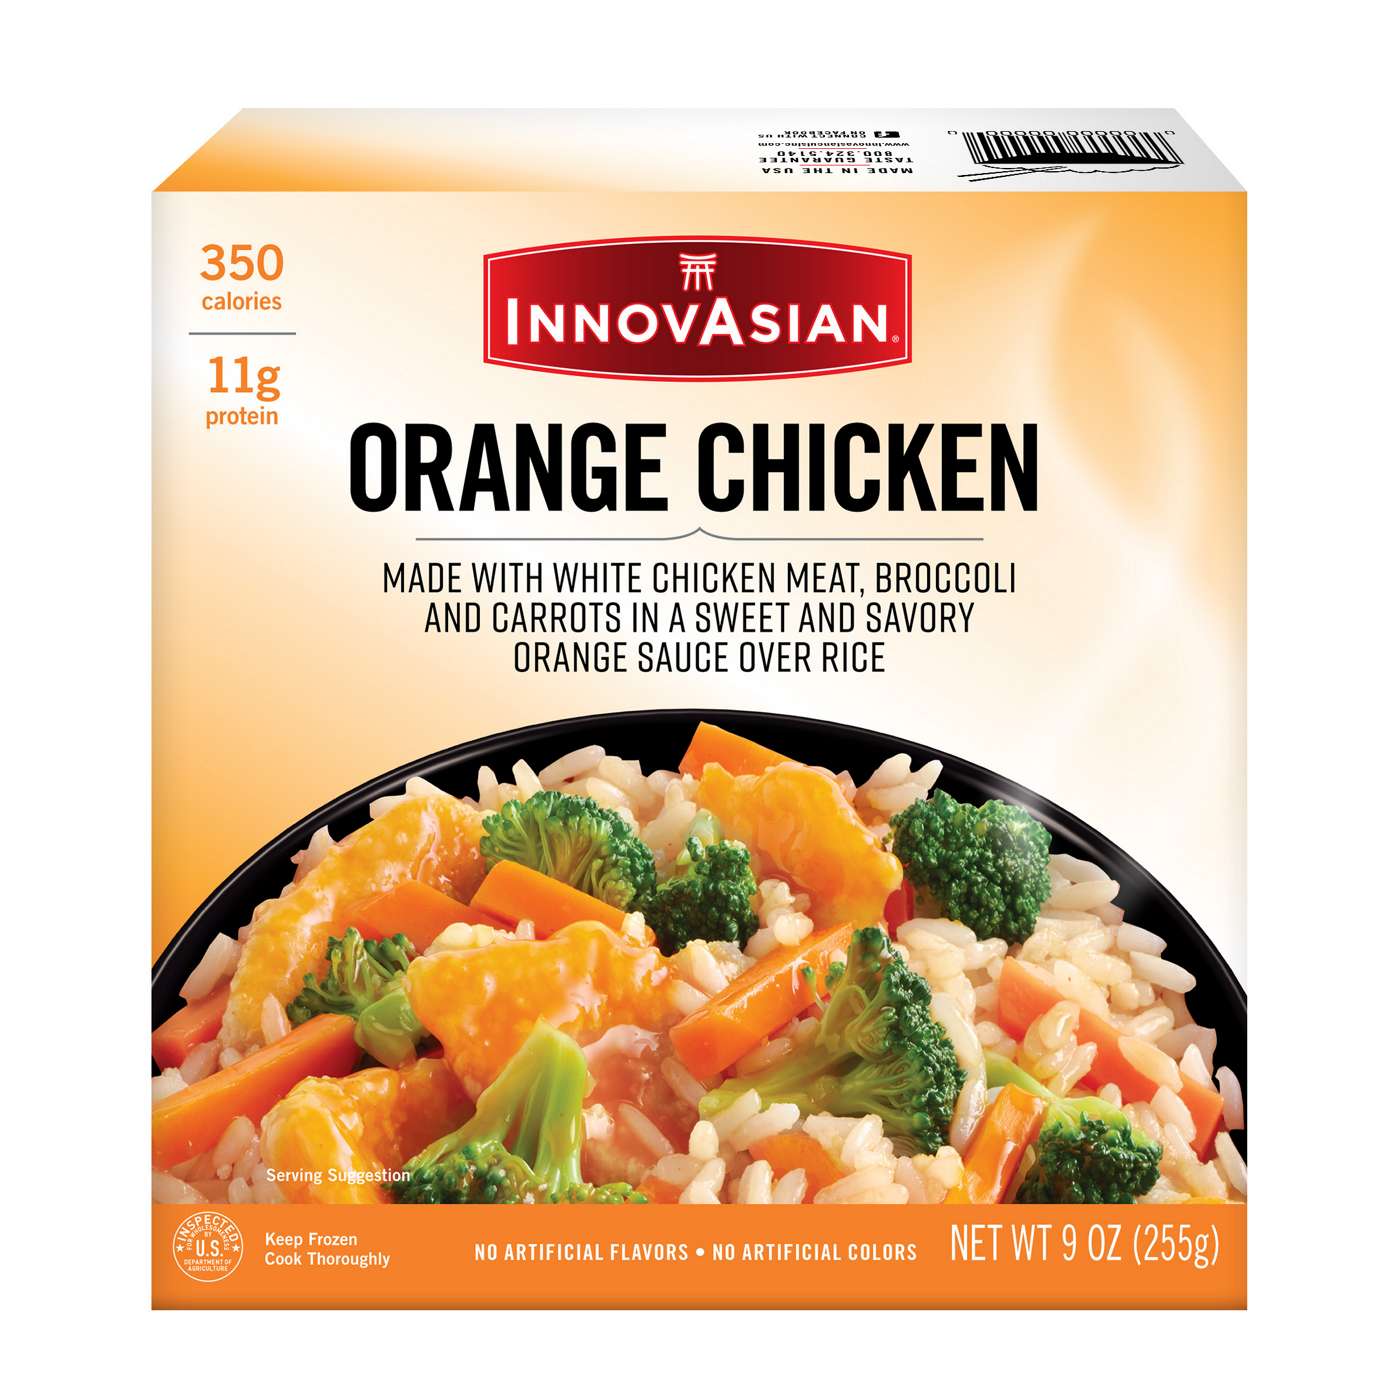 InnovAsian Orange Chicken Frozen Meal; image 1 of 2